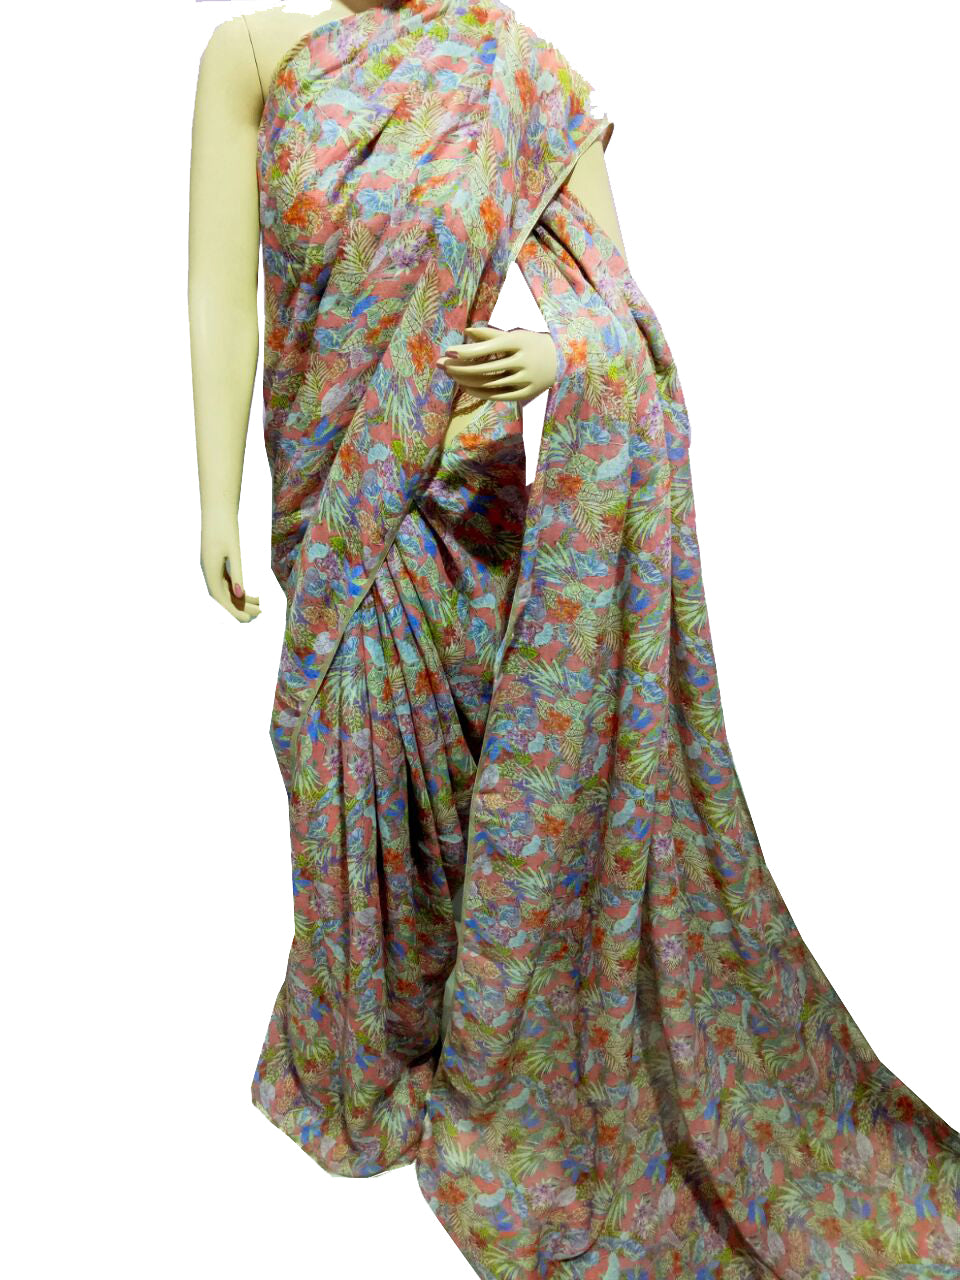 Muticolor Floral Printed Linen Saree-LNS001 Light brown coloured printed saree